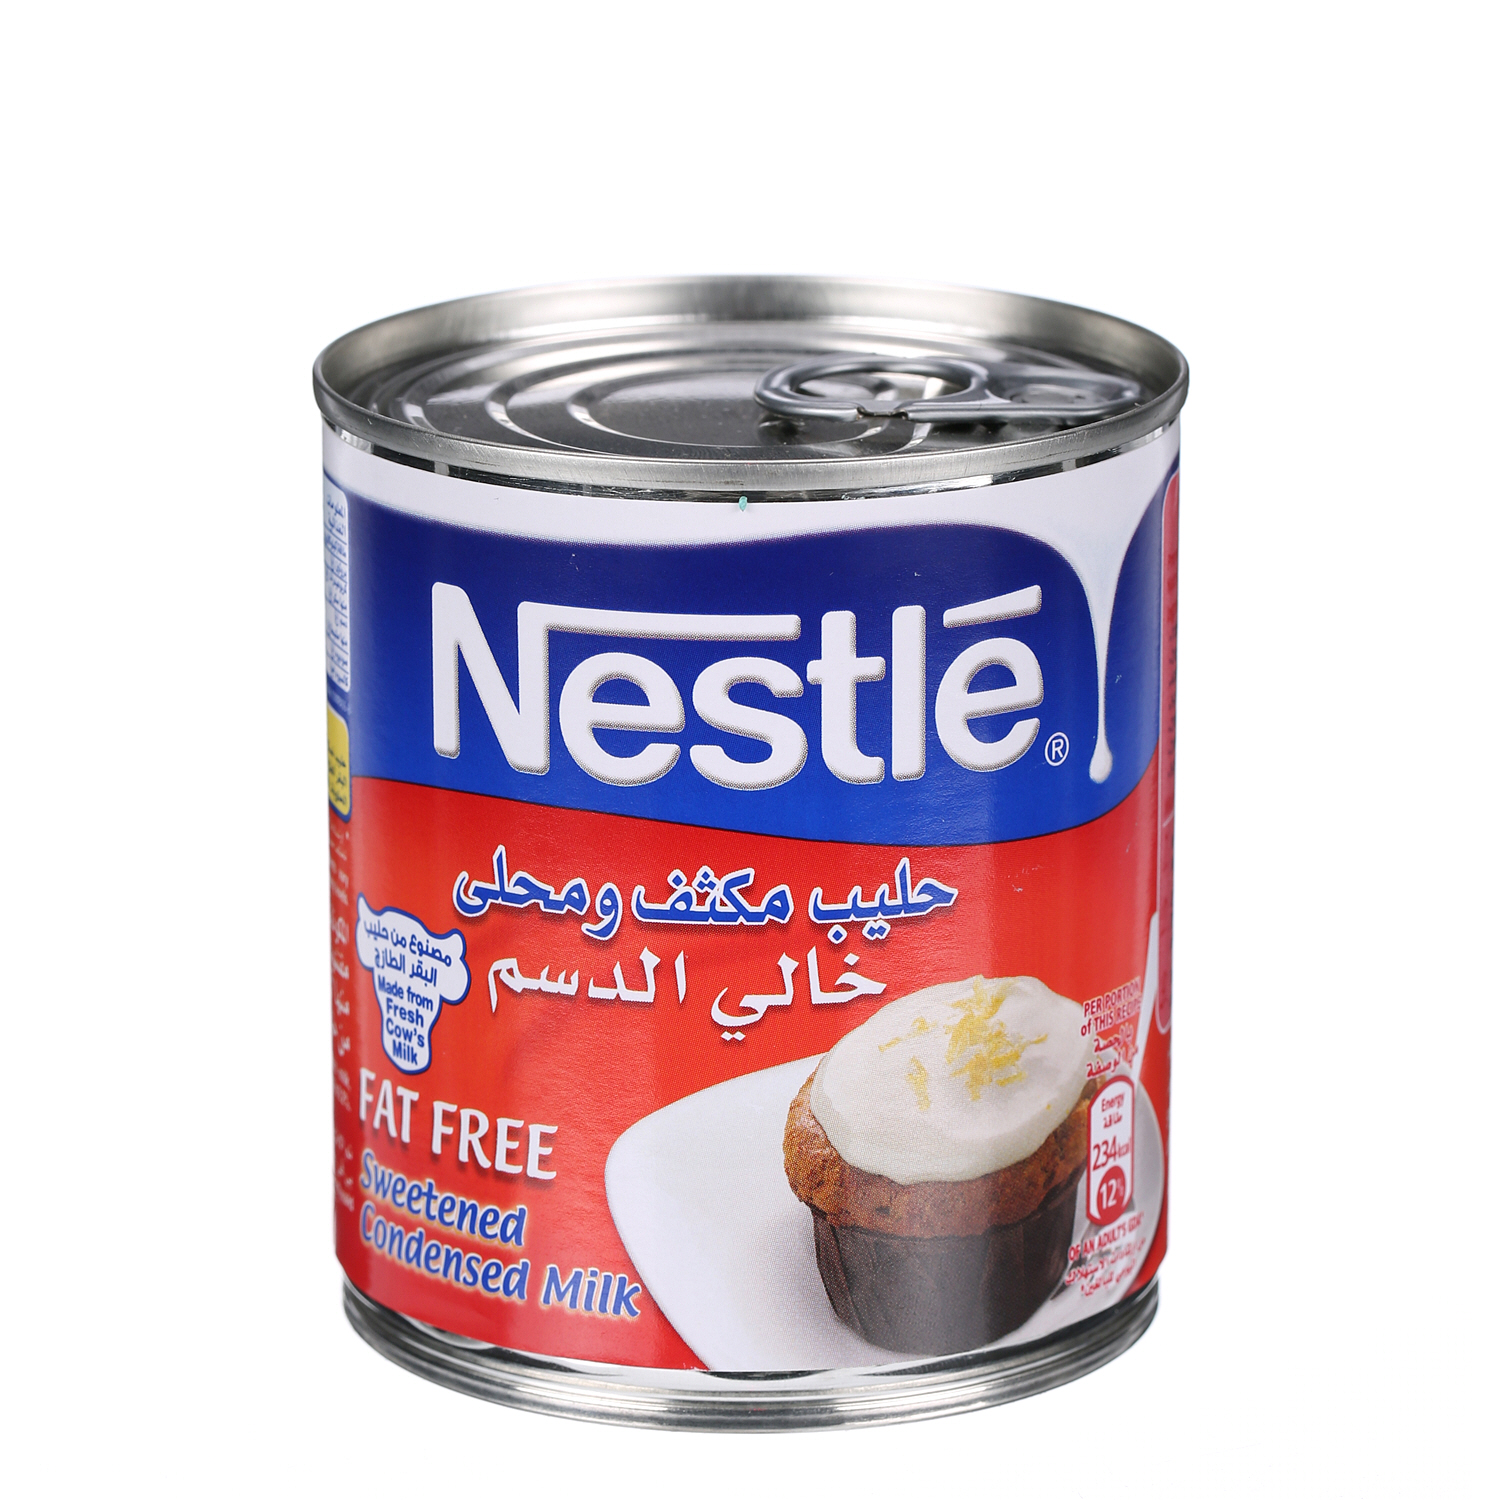 Nestlé Sweetened Condensed Milk Fat Free 405gm